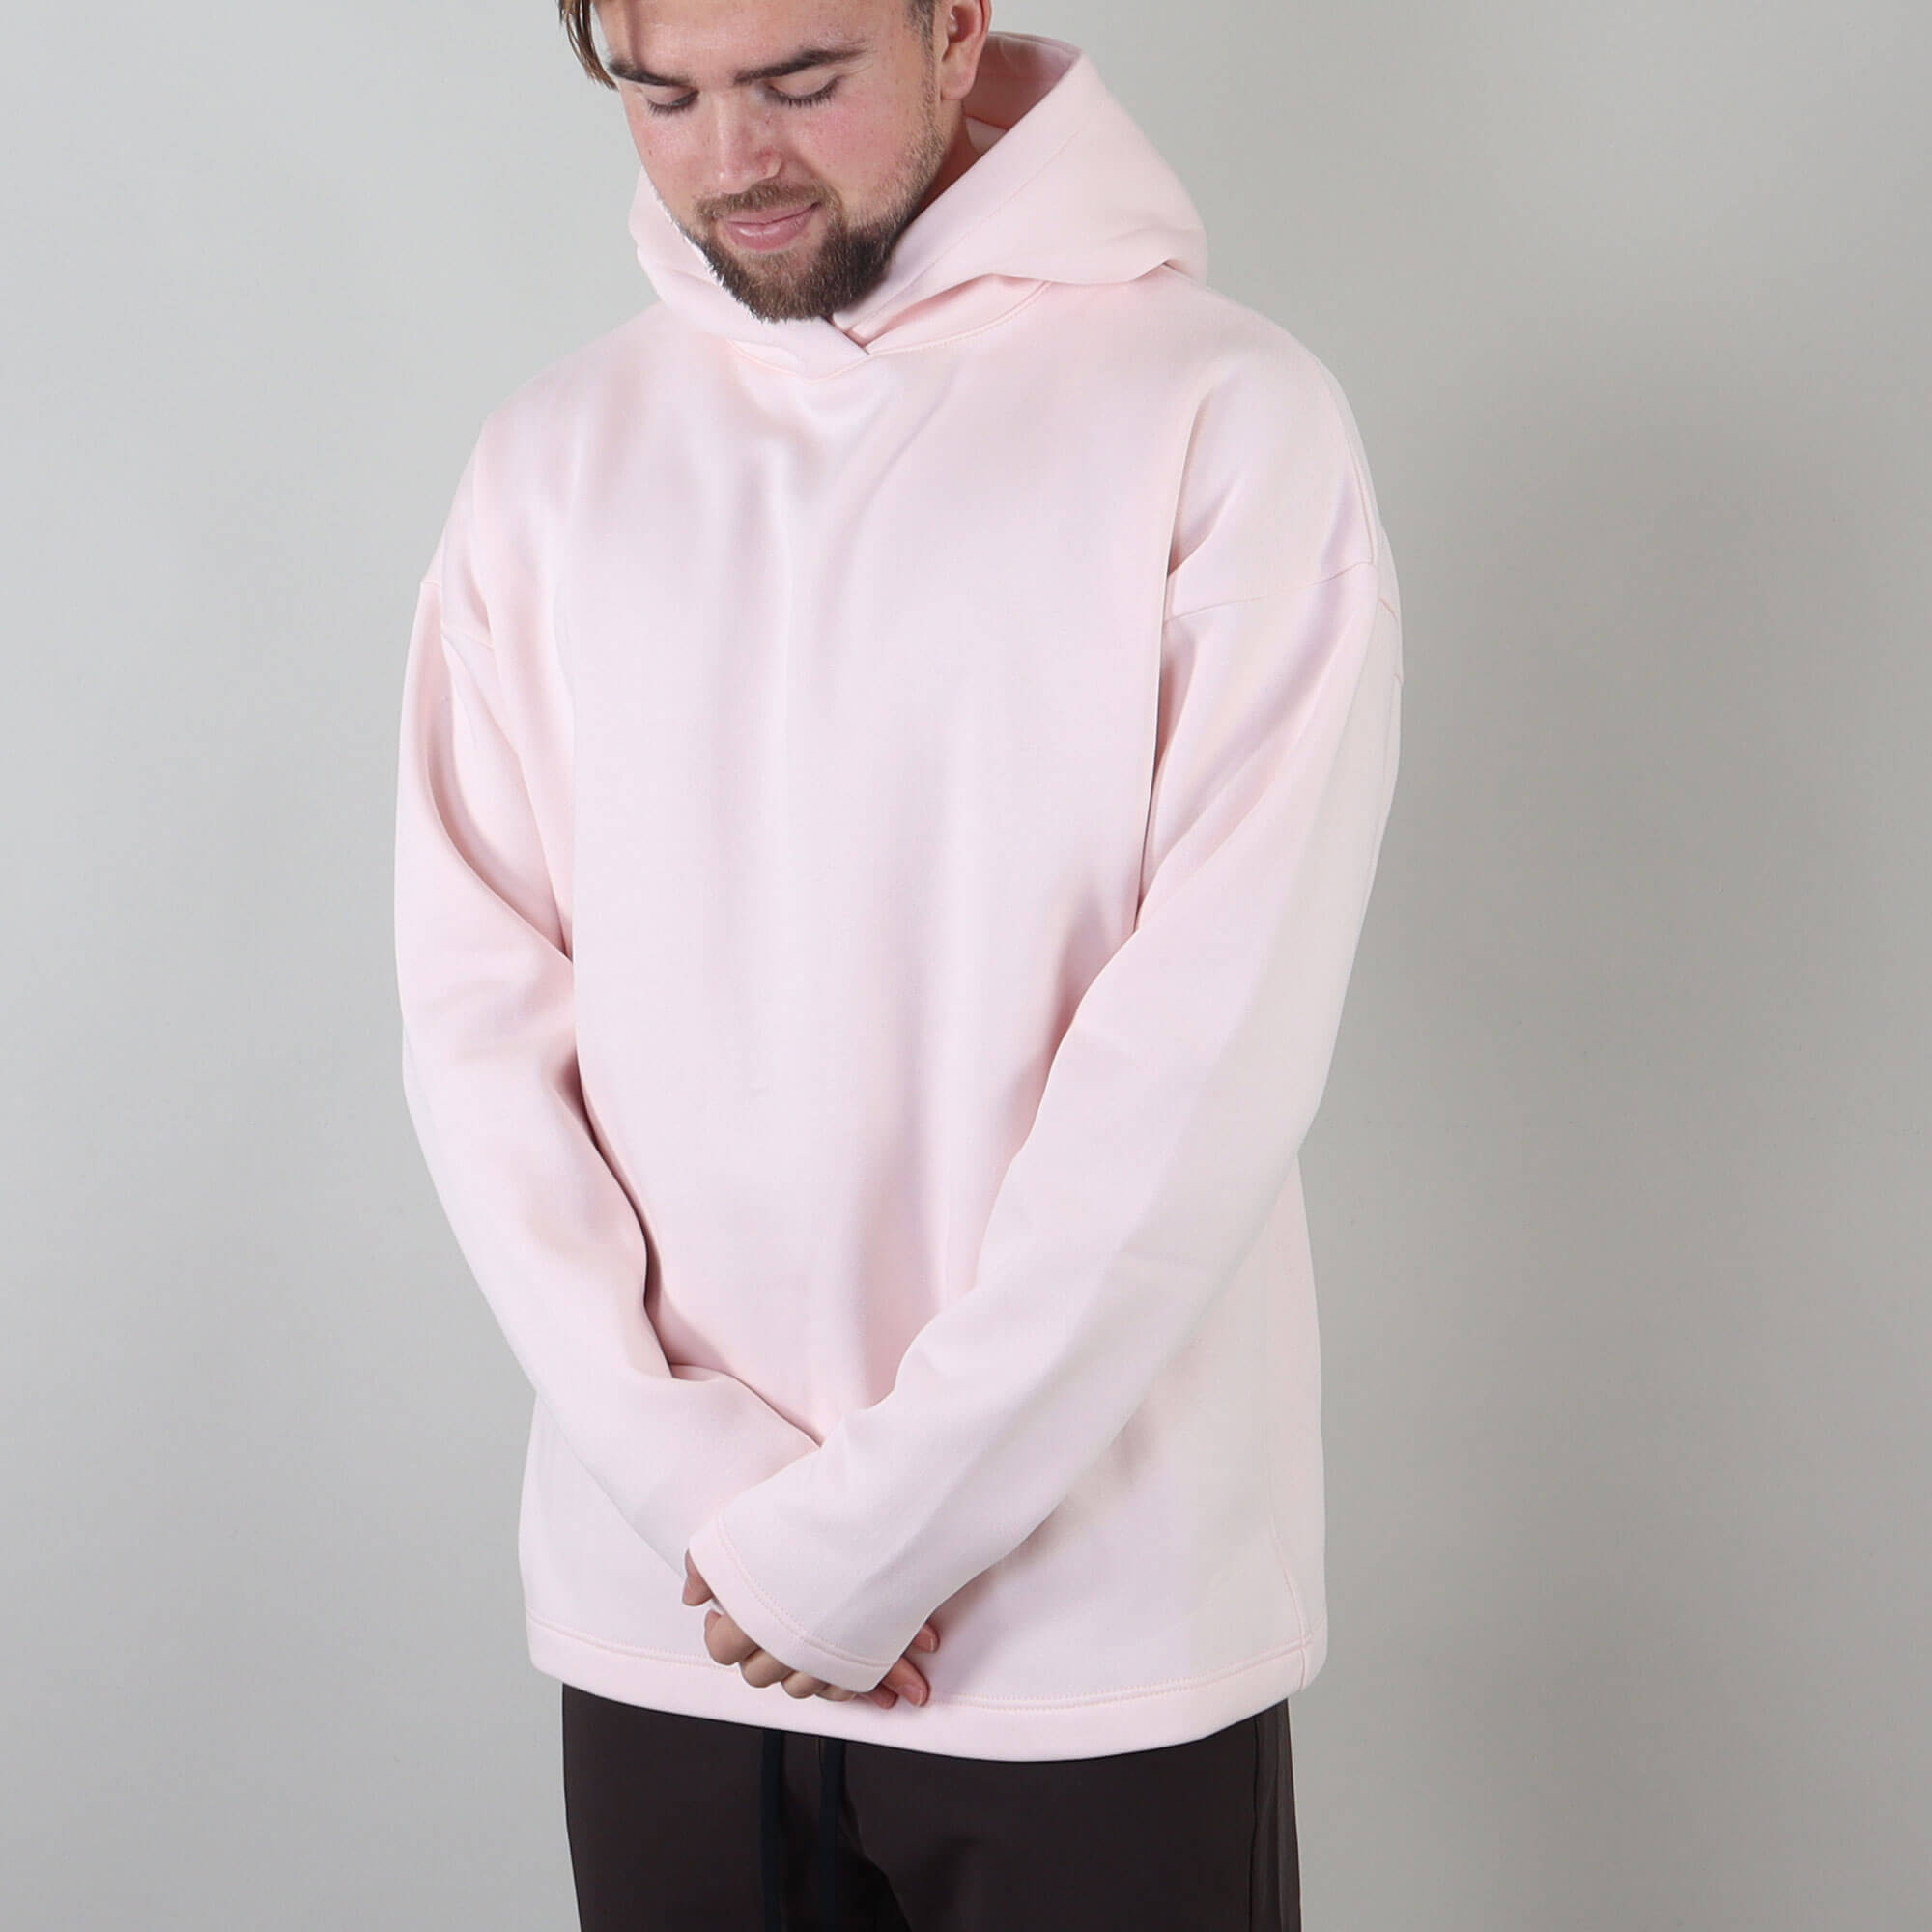 PRJCT hoodie baby pink